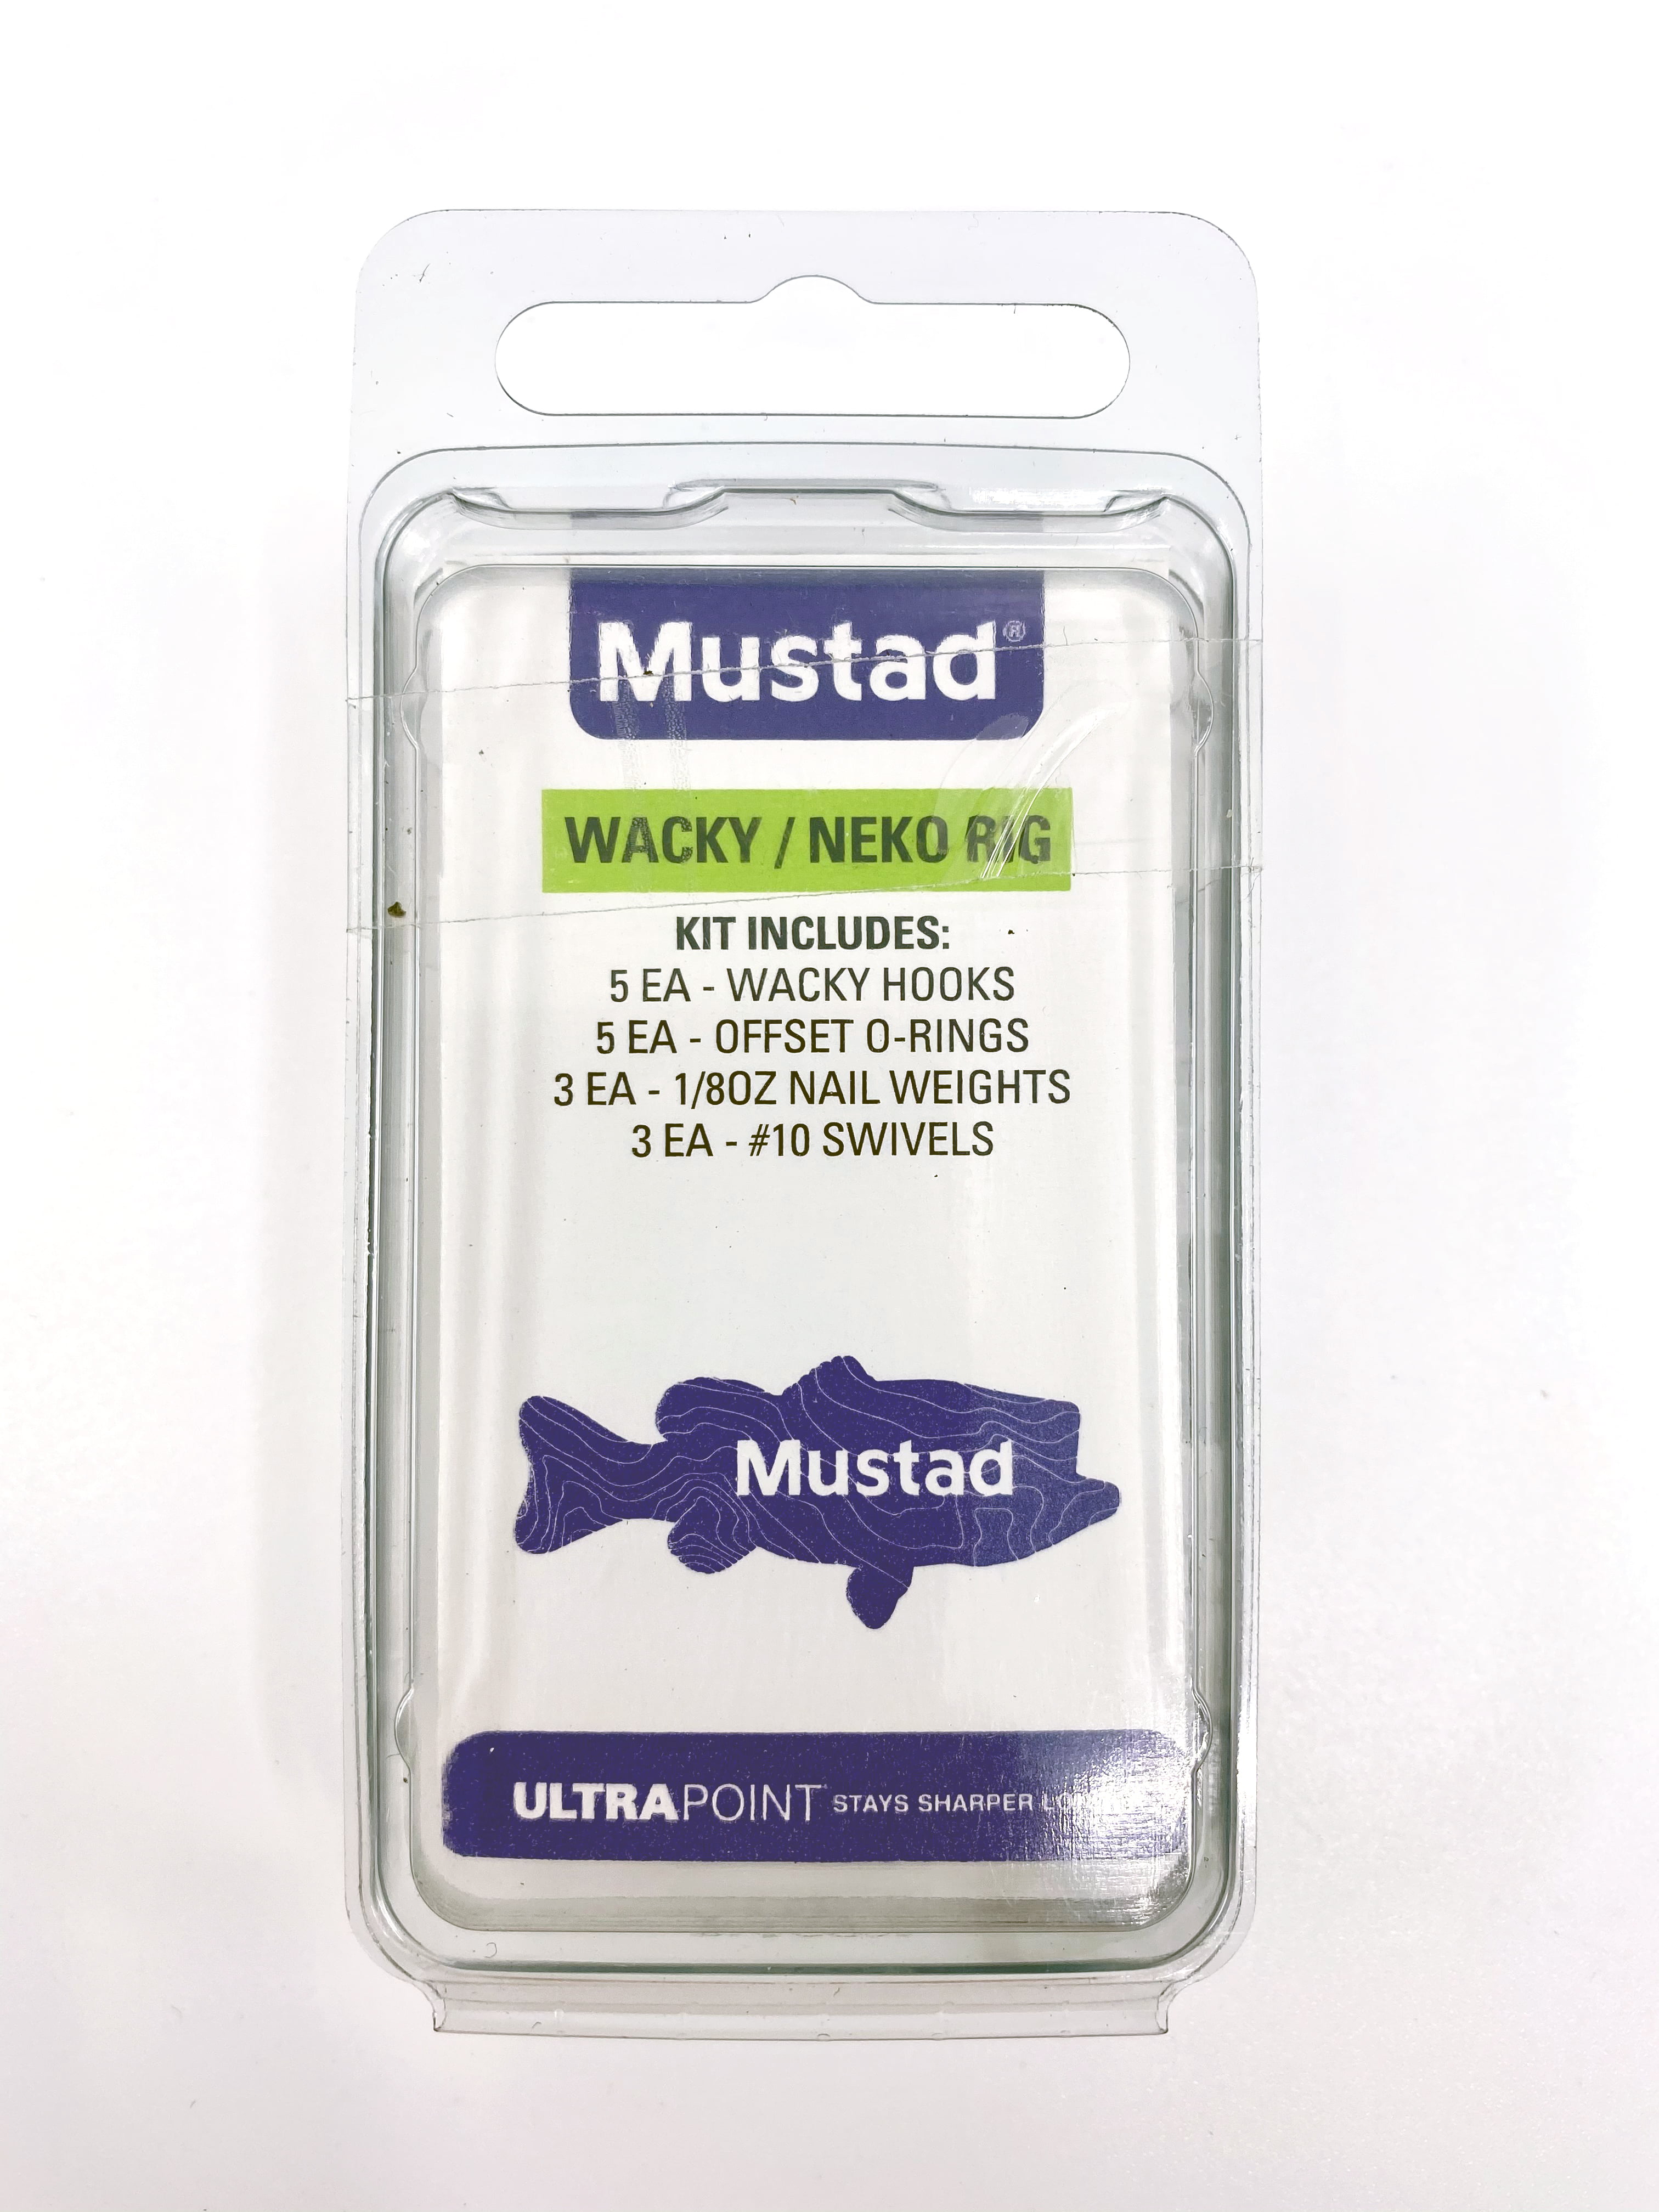 Mustad Wacky/Neko Rig Assorted Fishing Hook Kit 